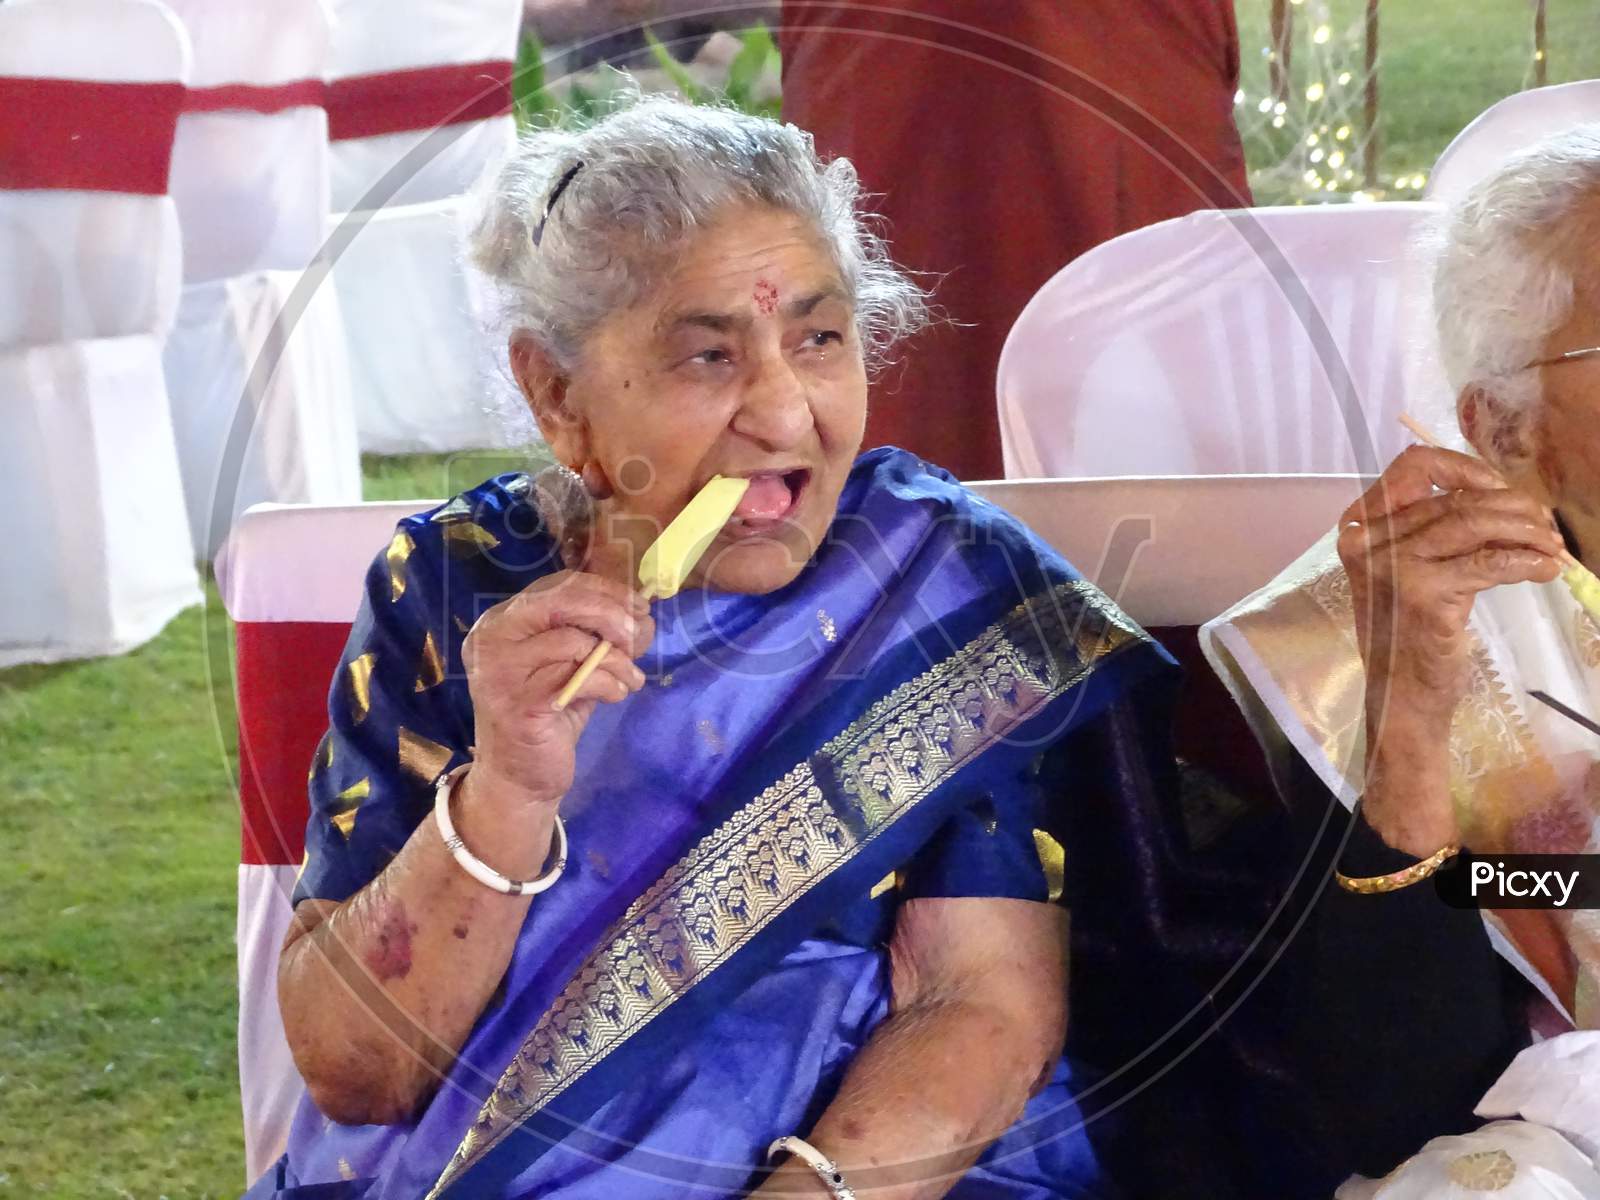 Old Indian woman having kulfi